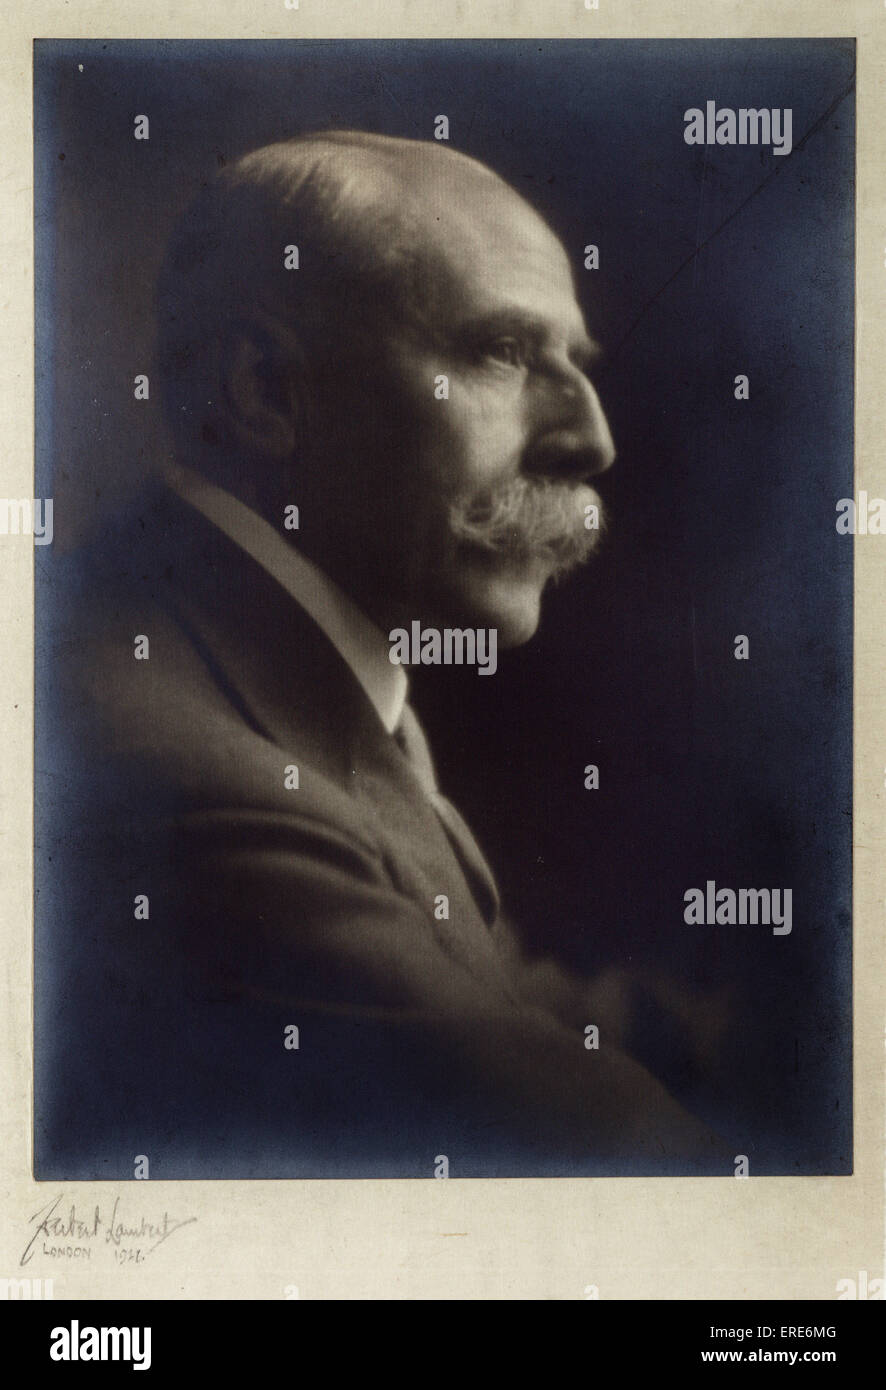 Edward Elgar, Porträt, 1921. Britischer Komponist 2. Juni 1857 - 23. Februar 1934.  Foto von Herbert Lambert (1881-1936). Stockfoto